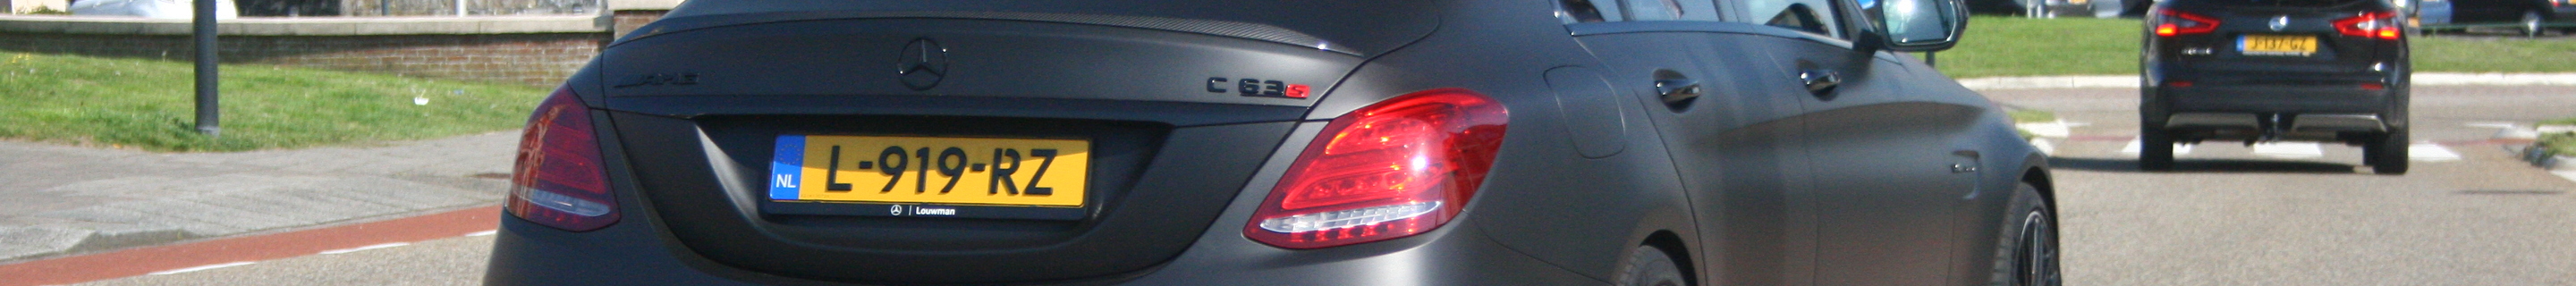 Mercedes-AMG C 63 S W205